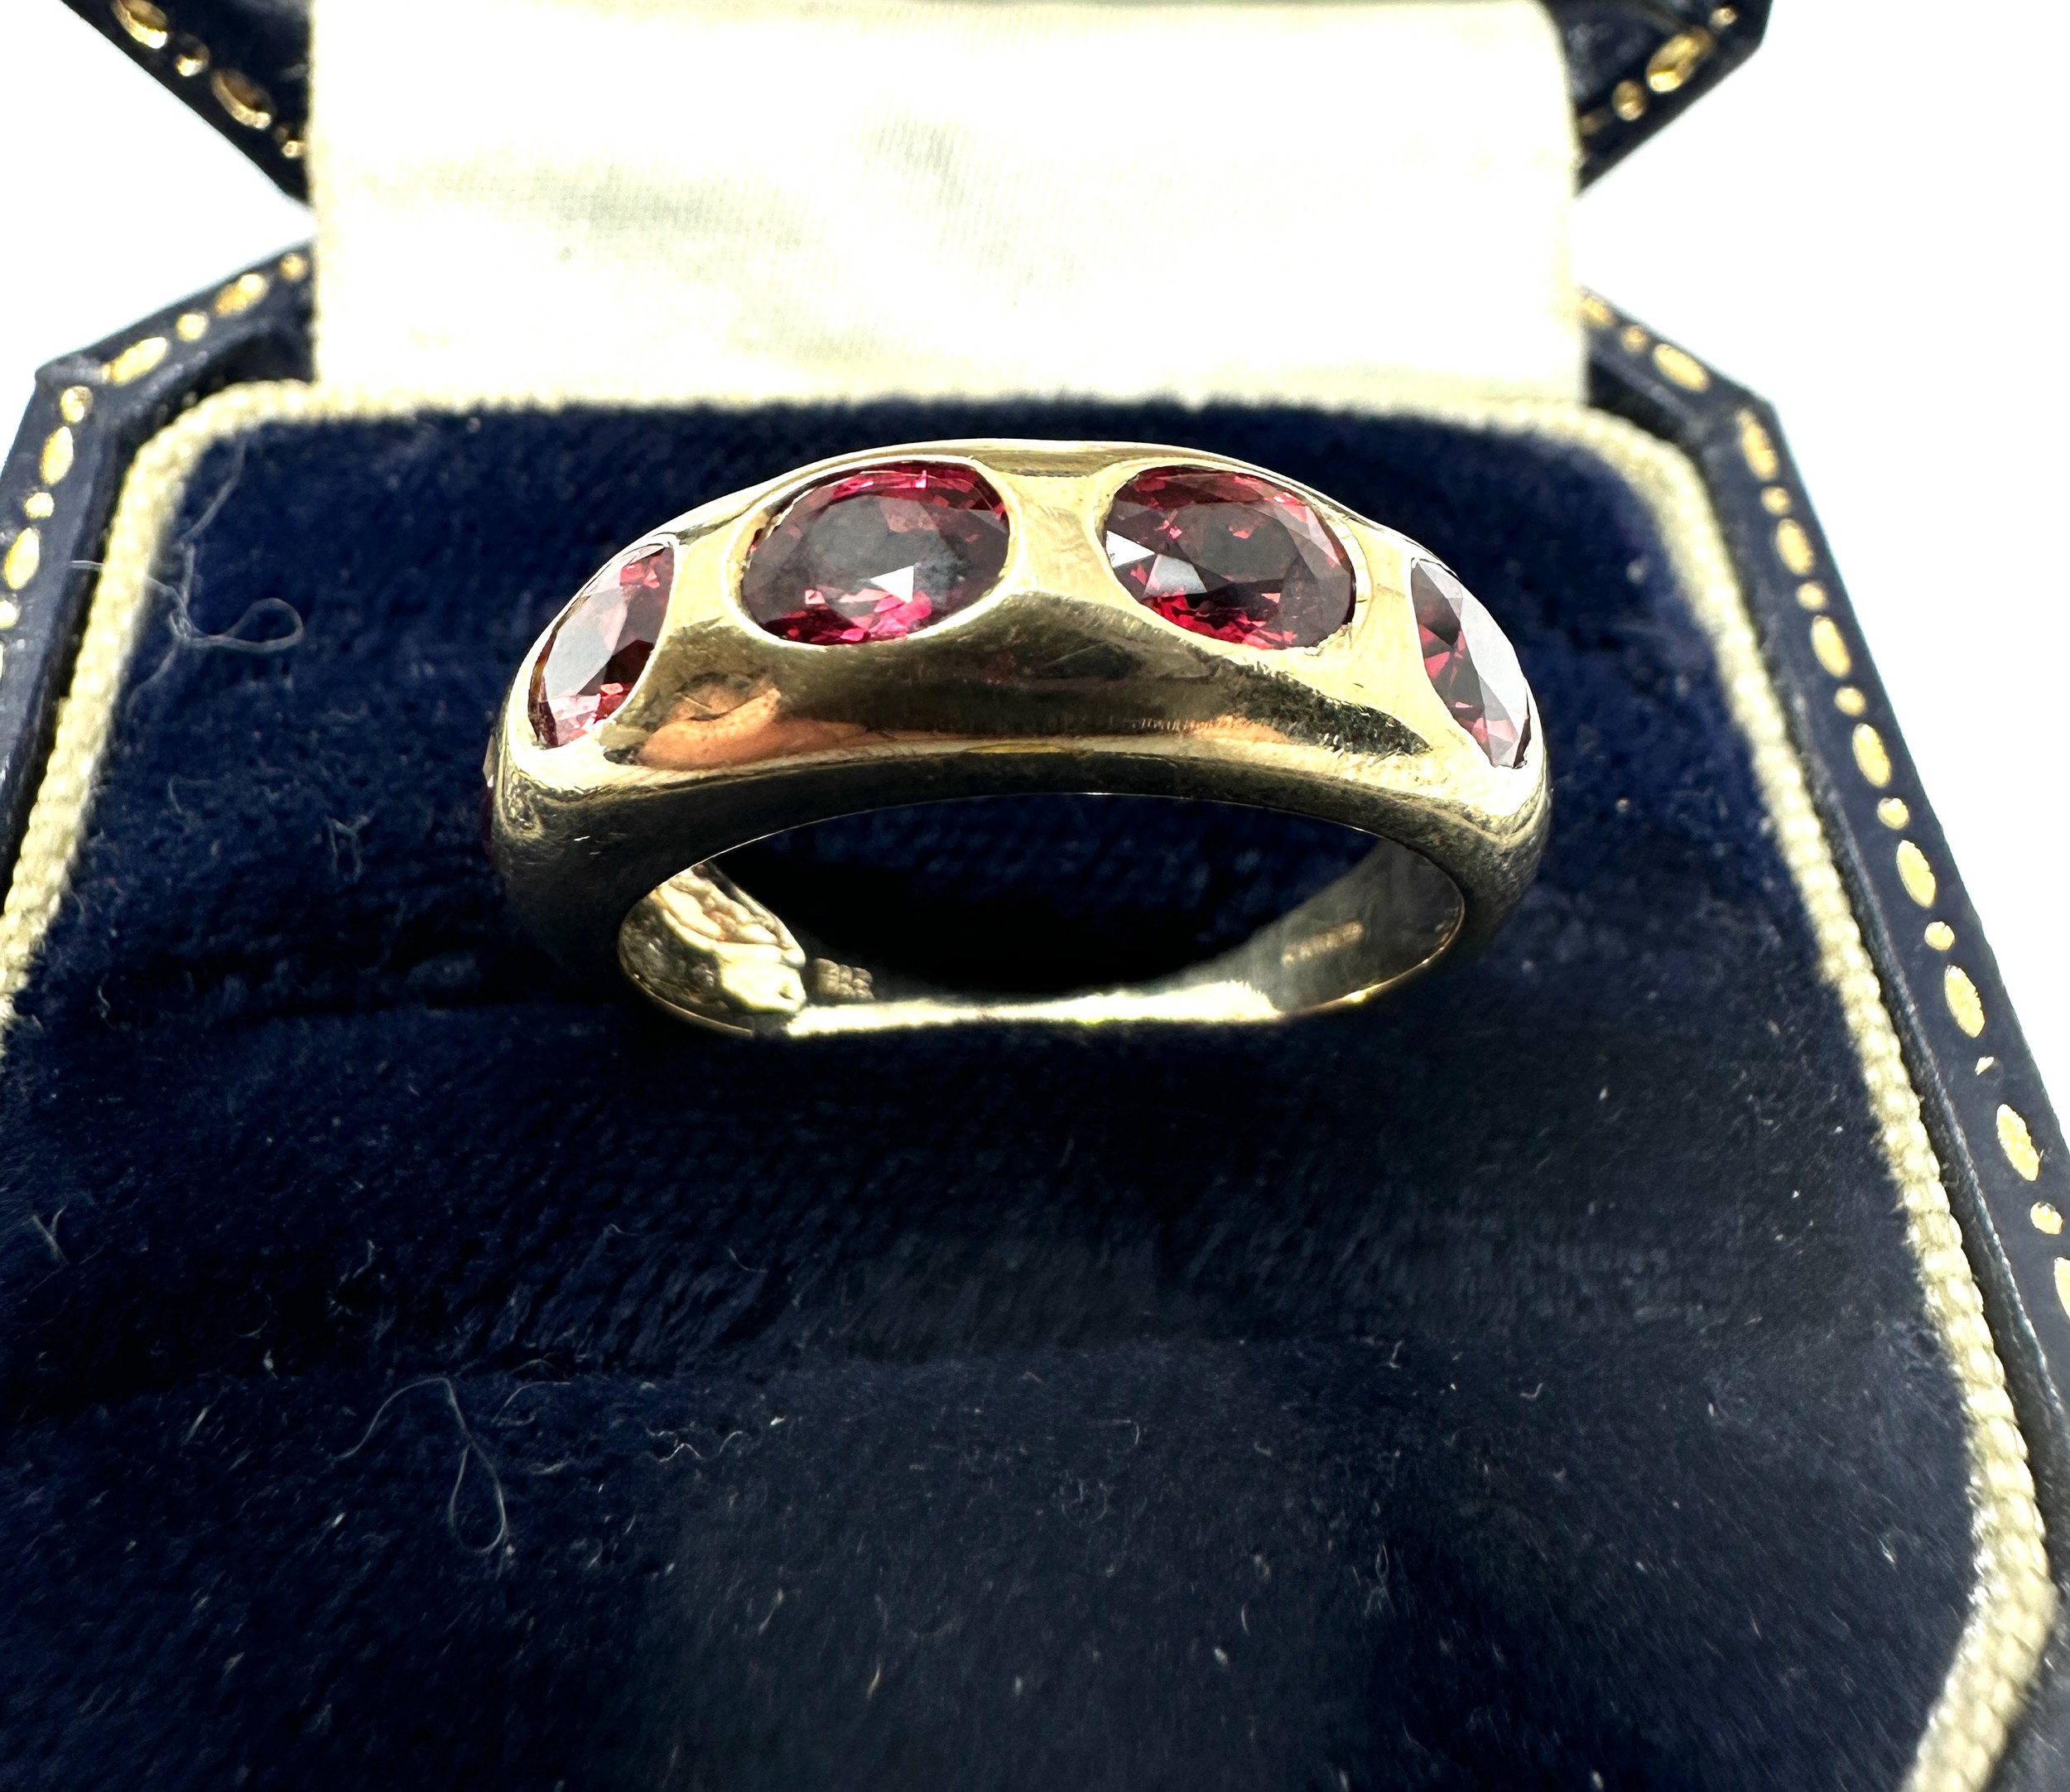 9ct gold red gemstone ring (3g)